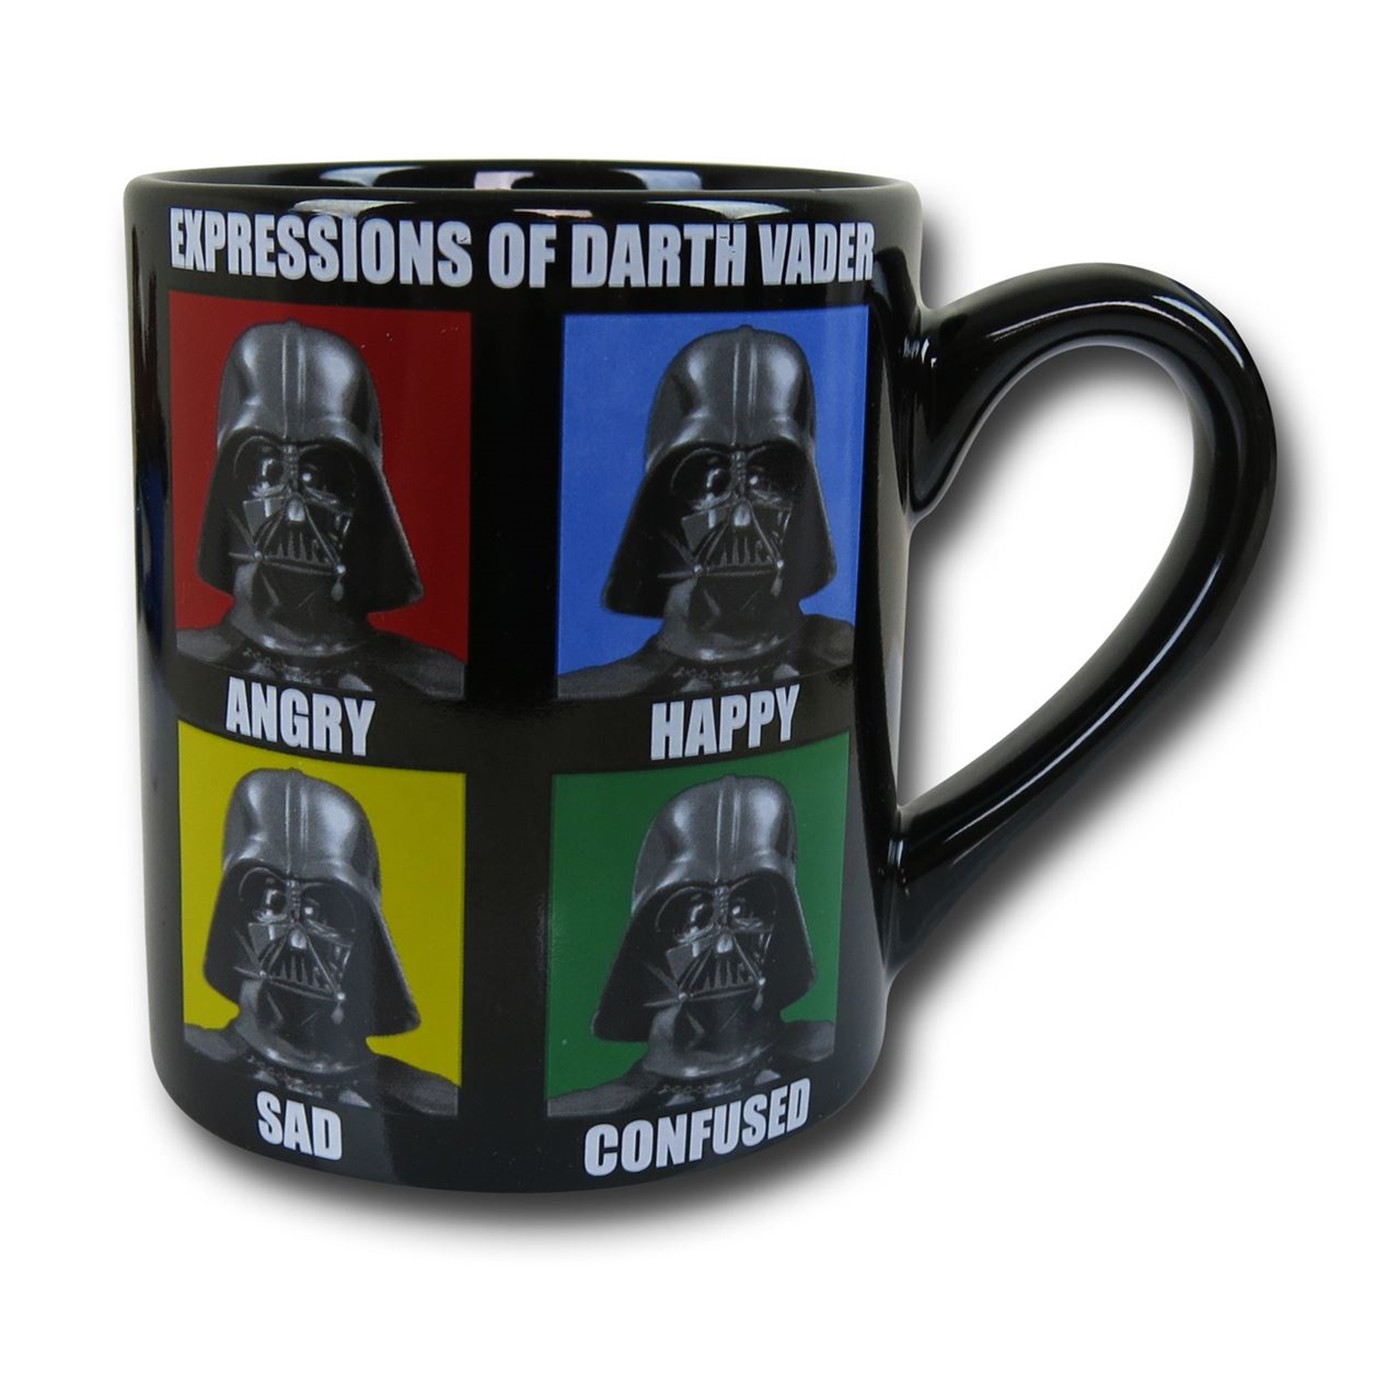 Star Wars Express Yourself Vader Mug